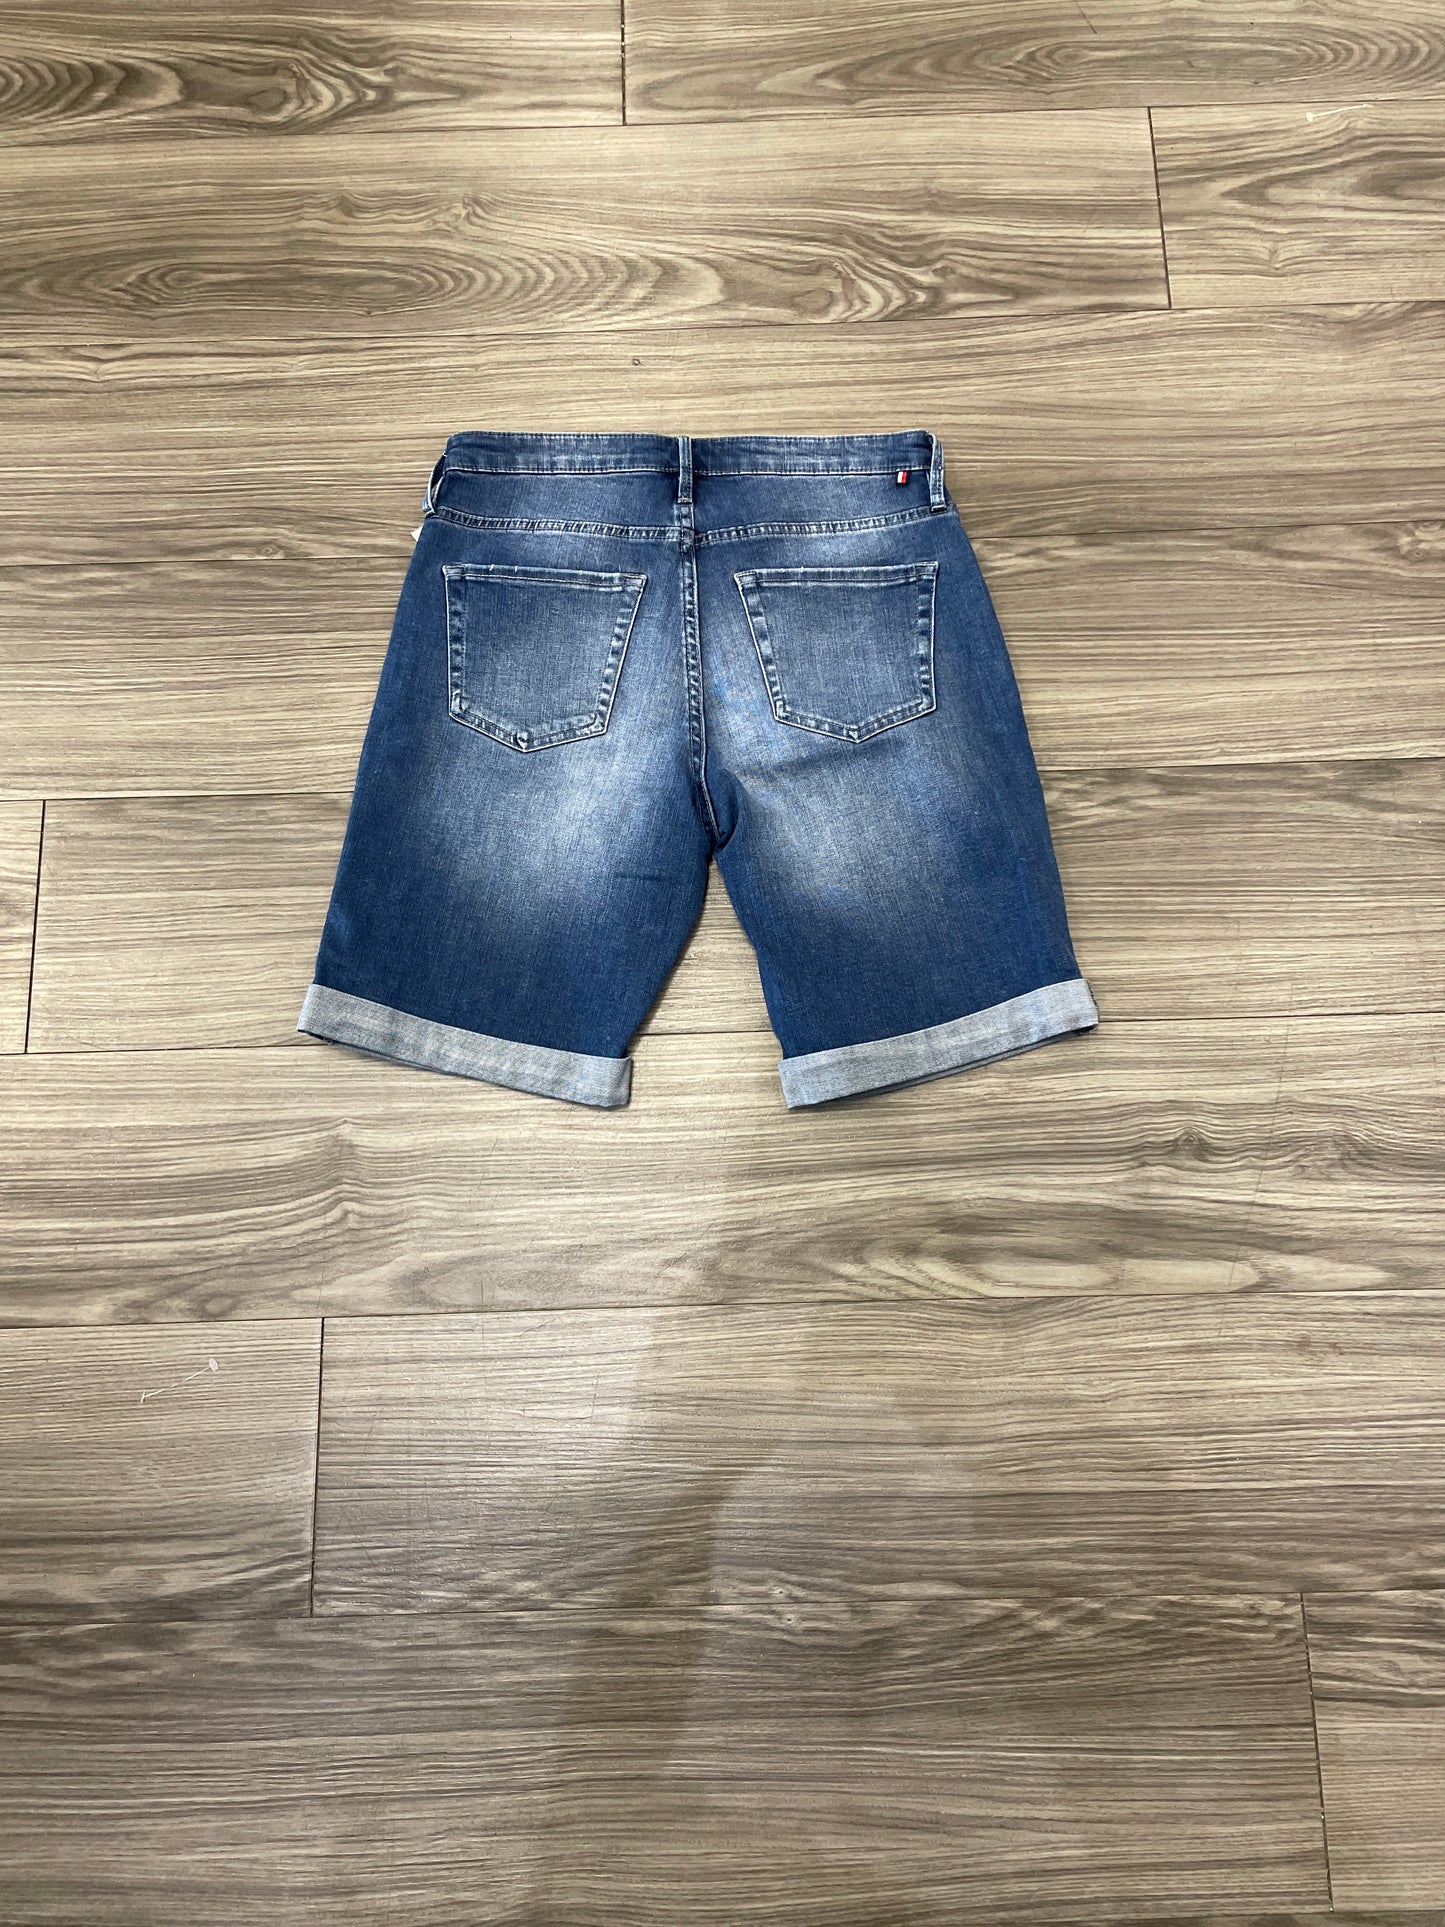 Shorts By Tommy Hilfiger  Size: 4